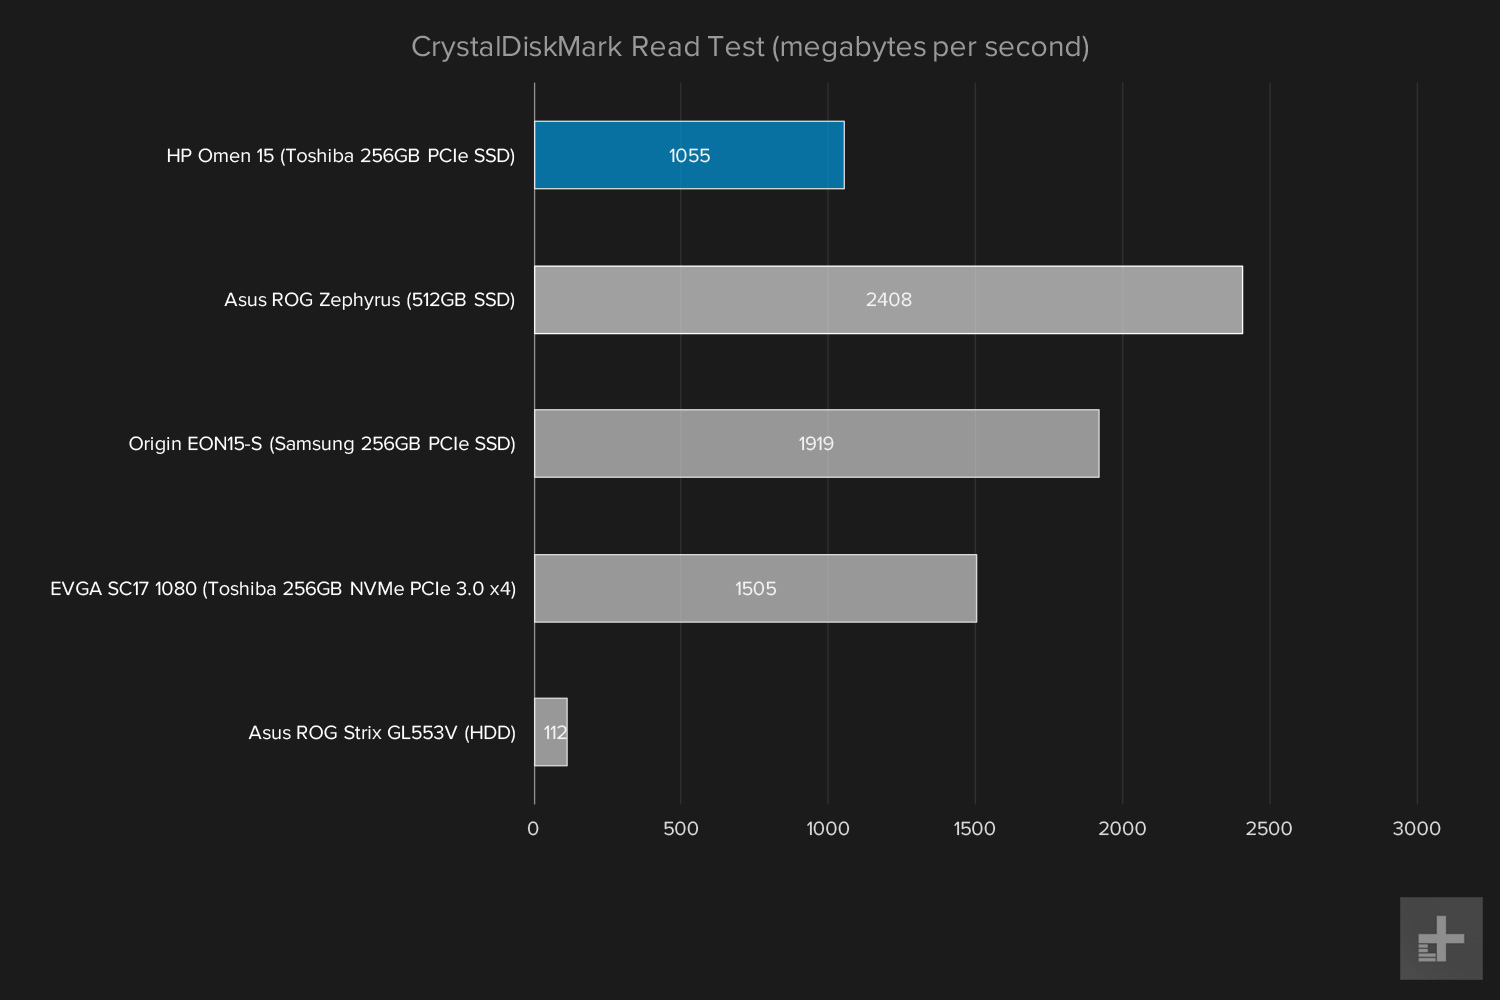 HP Omen benchmark graphs CrystalDiskMark read